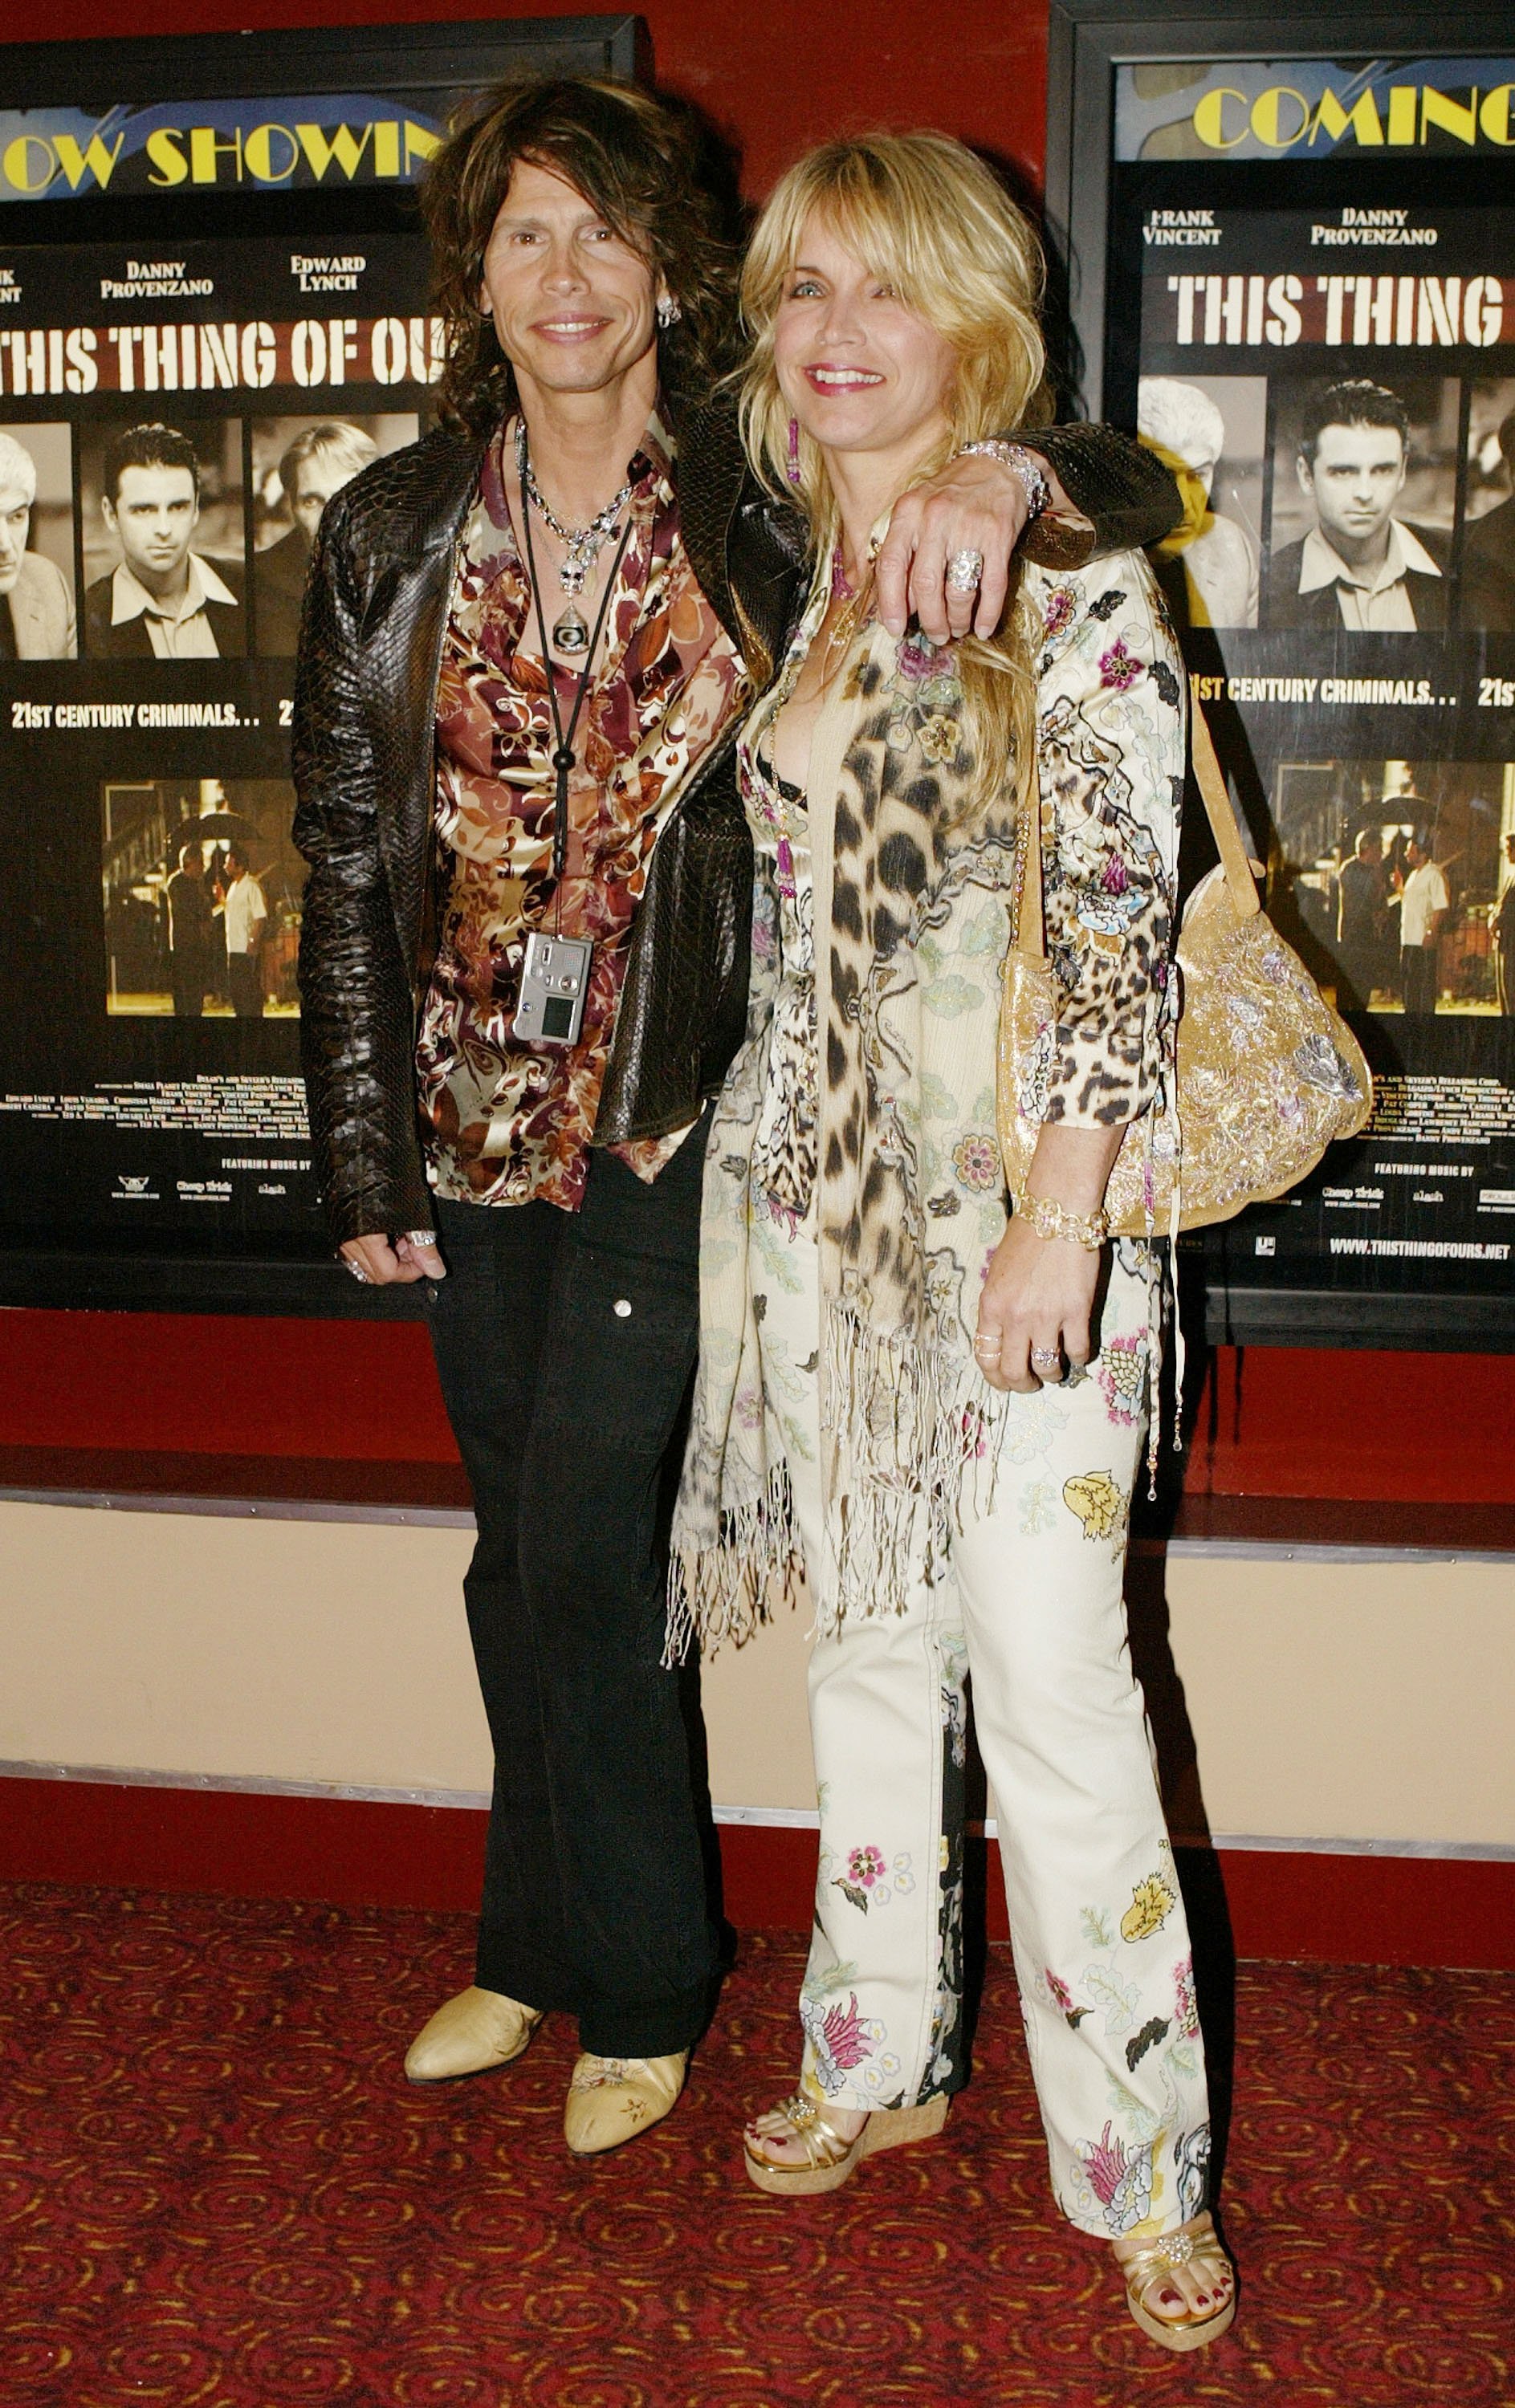 Get To Know Taj Monroe Tallarico - Son of Steven Tyler With Ex-Wife Teresa  Barrick